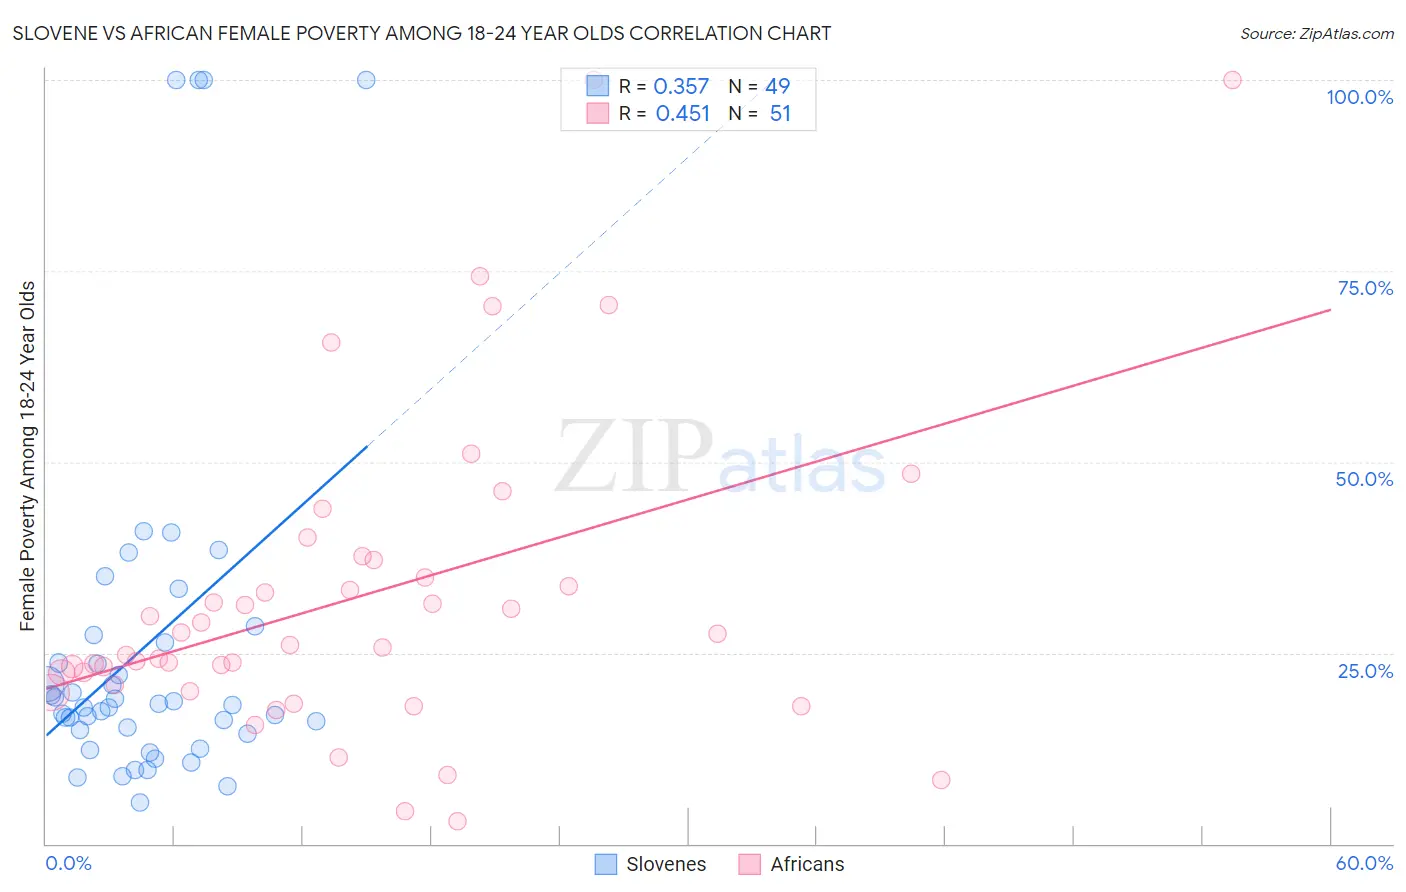 Slovene vs African Female Poverty Among 18-24 Year Olds